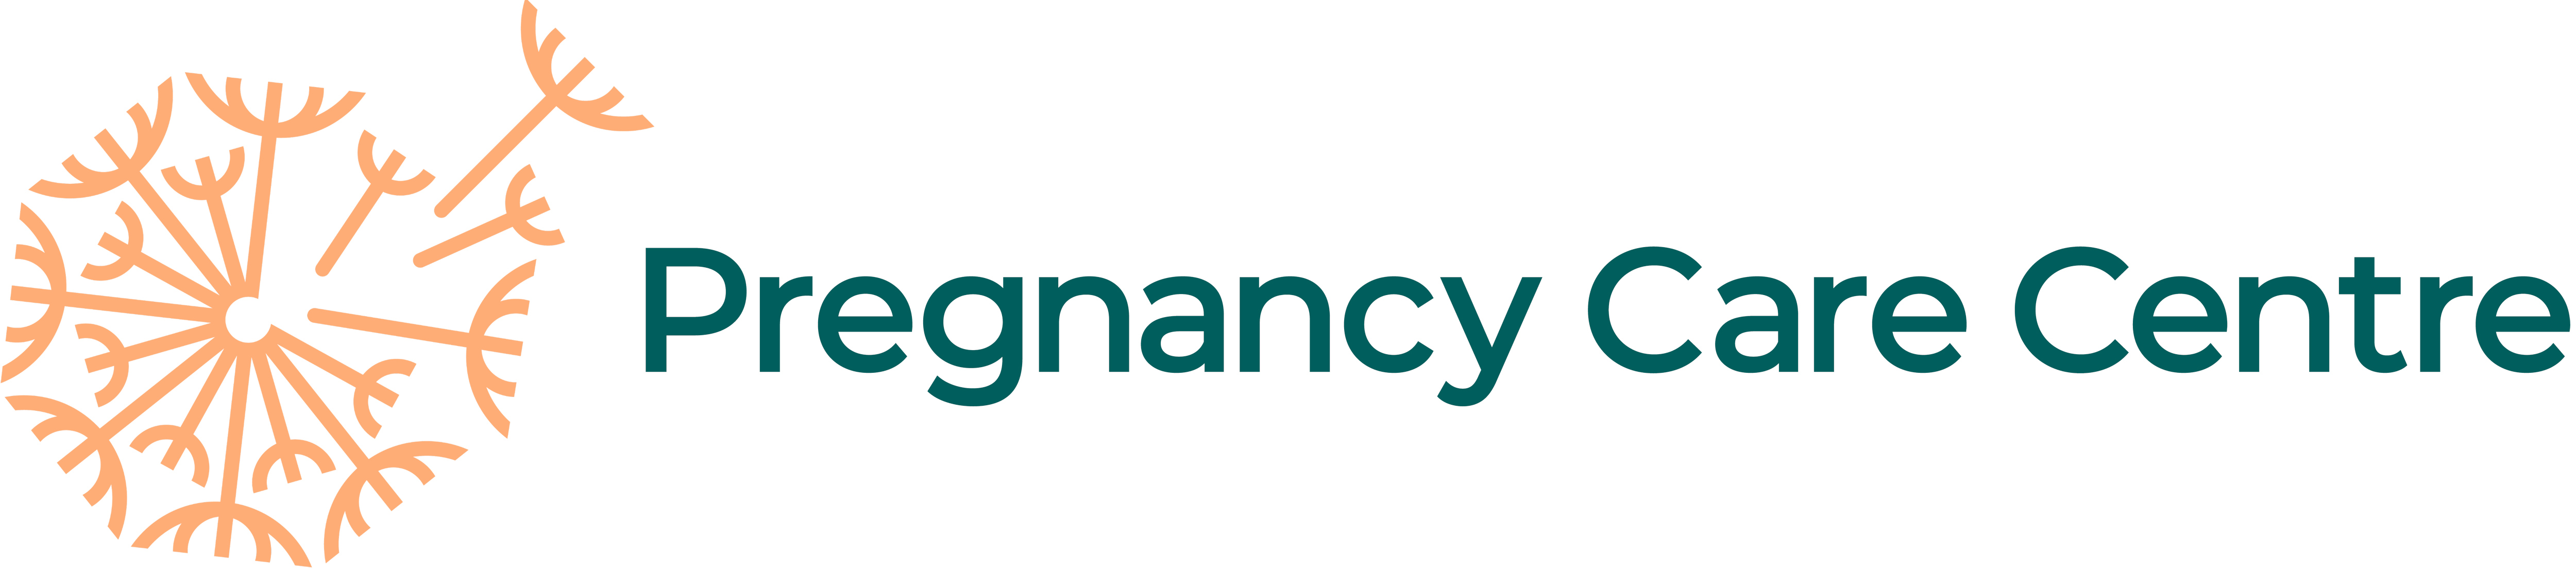 Pregnancy Care Centre (PCC) Edmonton & Barrhead logo